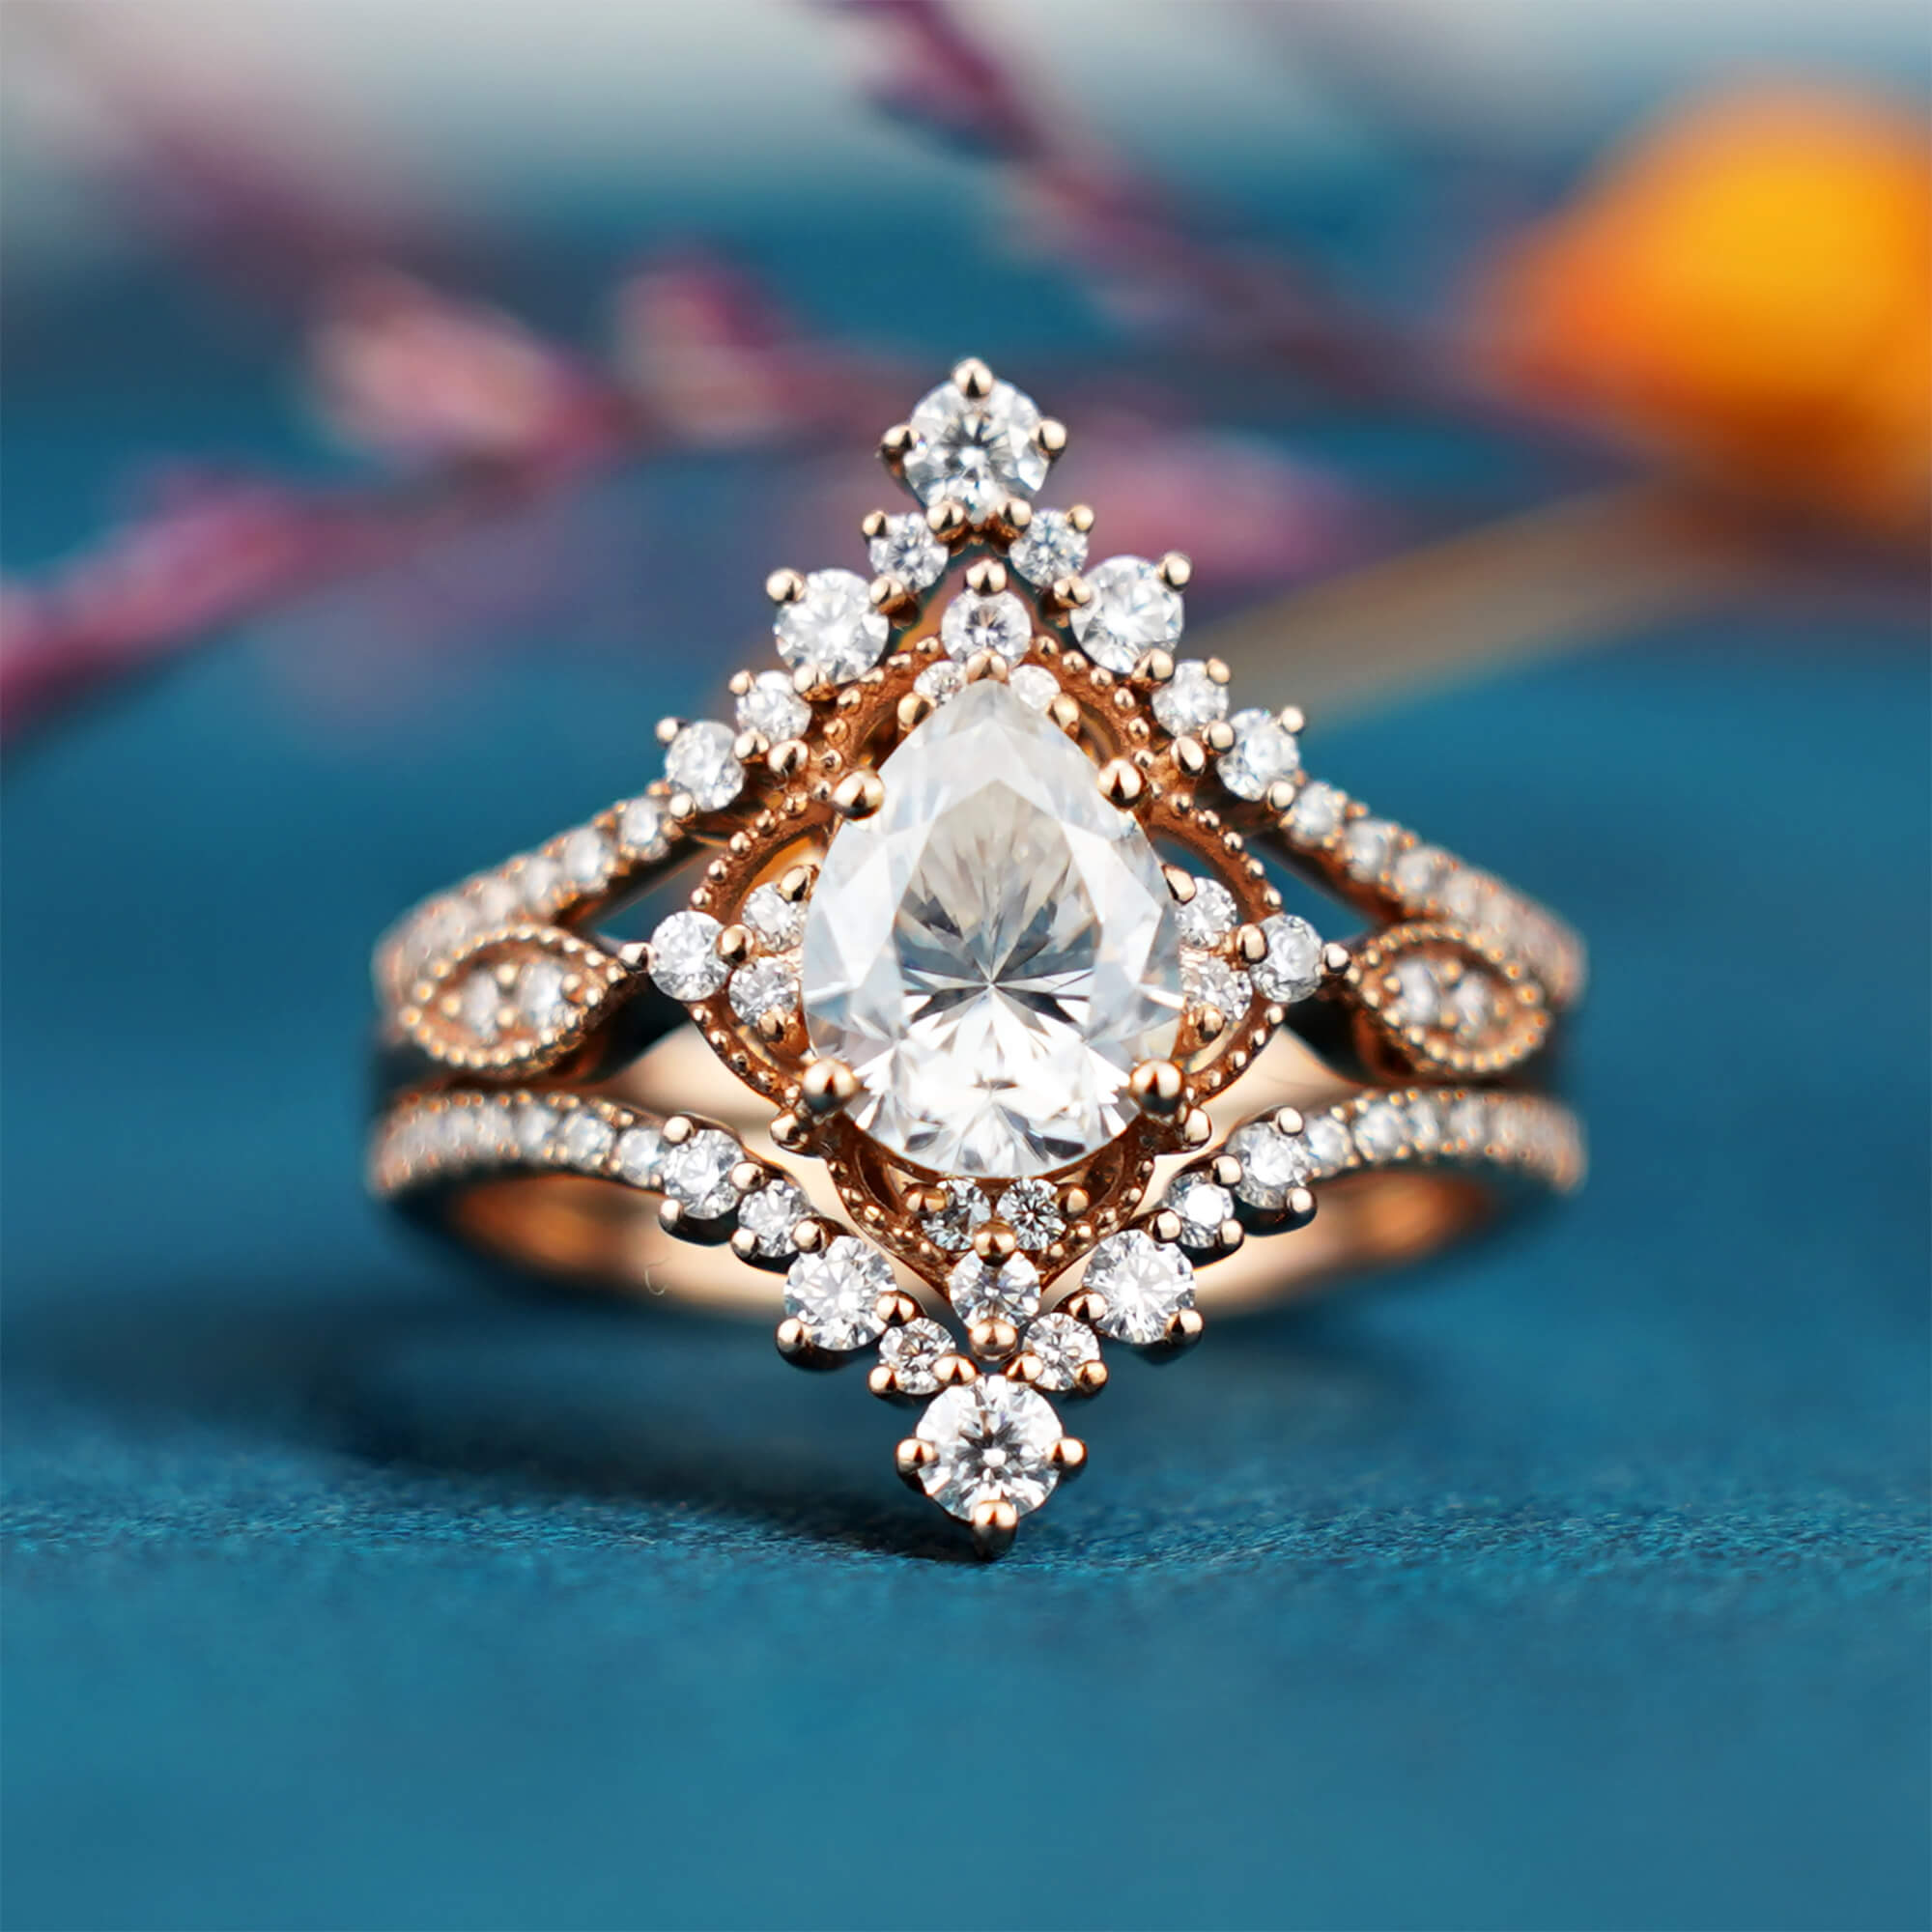 Vintage Cluster Moissanite Engagement Ring Wedding Trio Set Pear Cut Art Deco Style Rose Gold Bridal Set With Milgrain Diamond Halo Ring